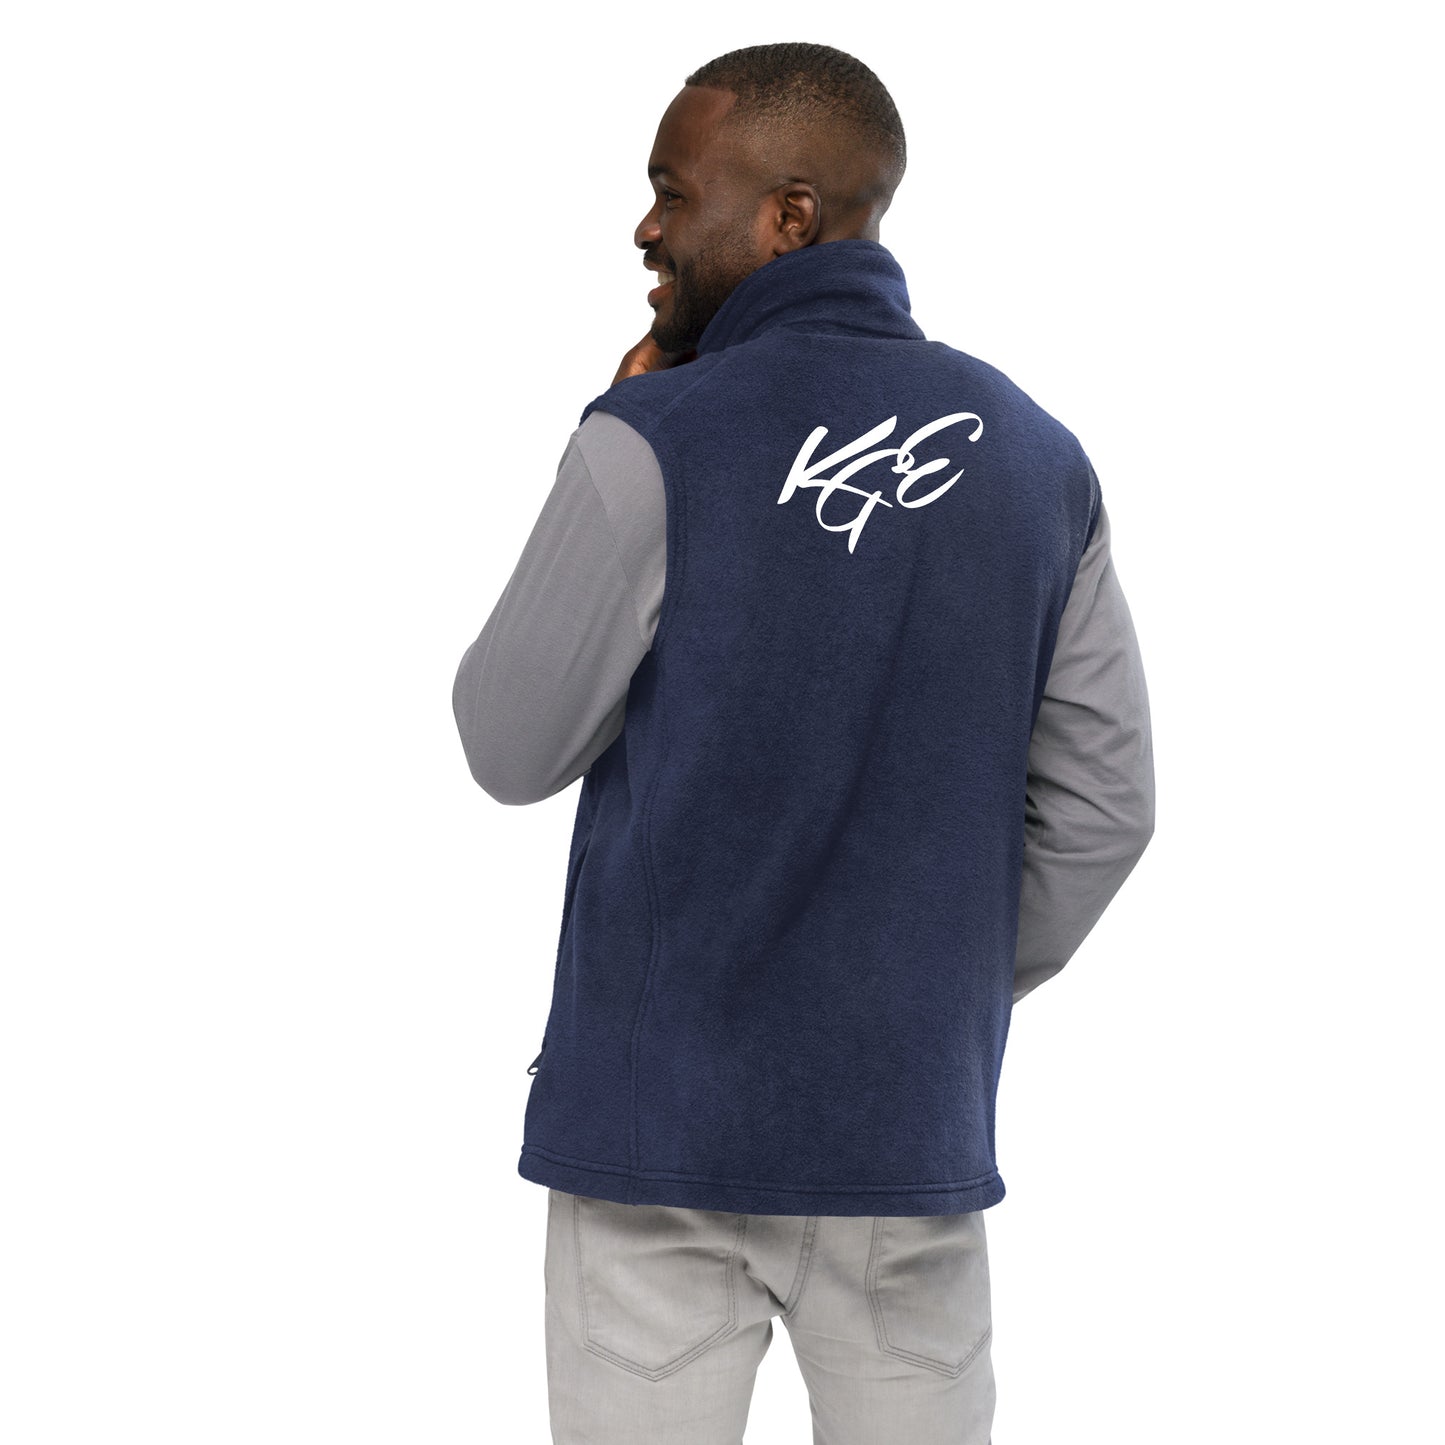 (New) KGE Unlid Men’s Columbia fleece vest Sizes (Sizes S-3XL)